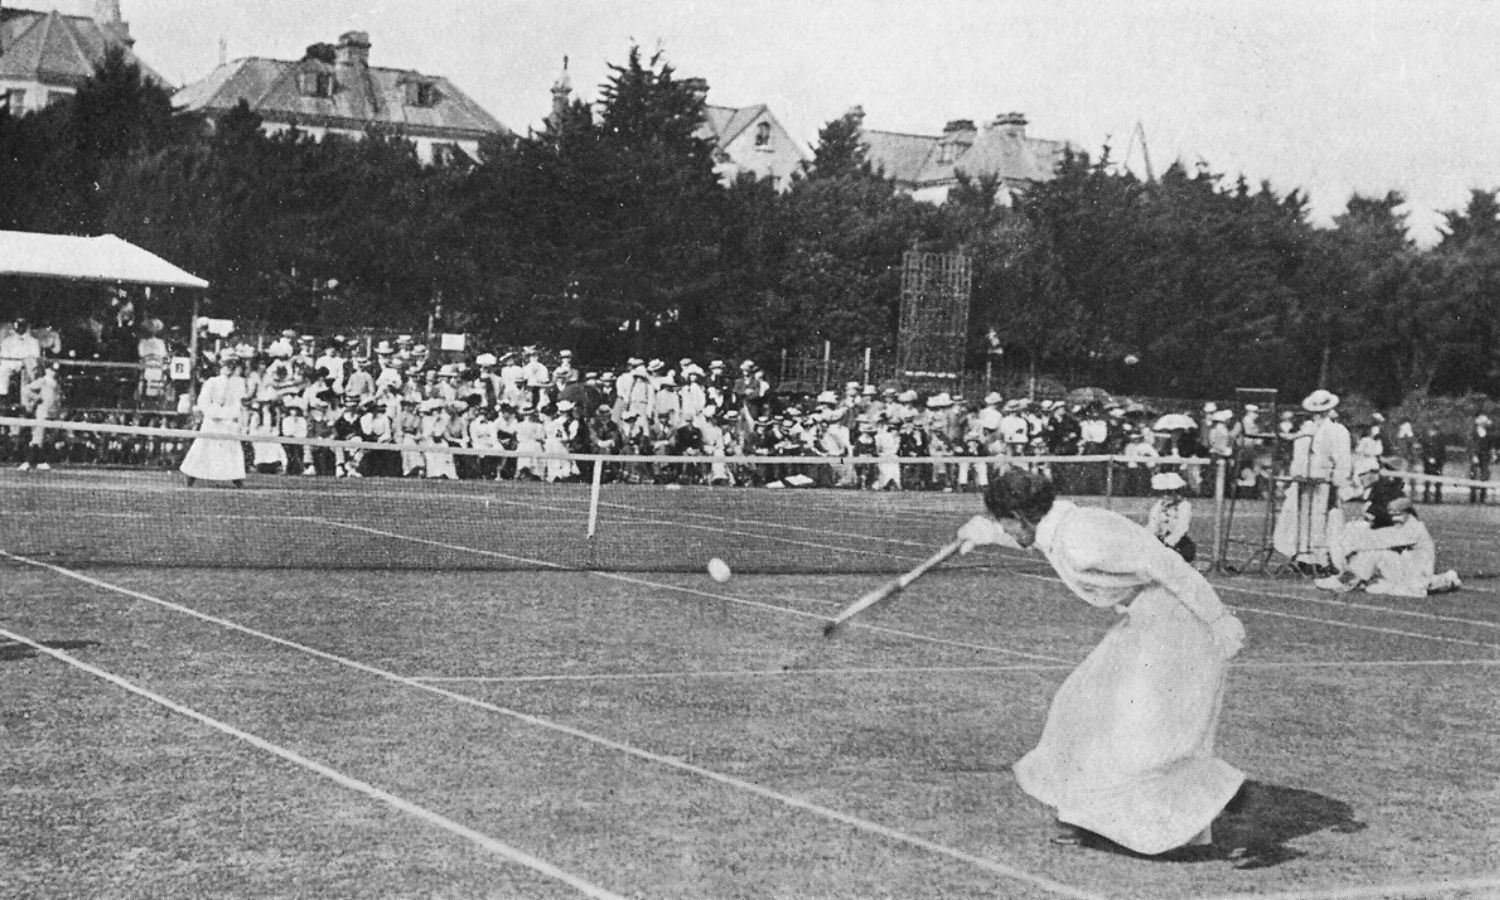 OTD in 1900: Charlotte Cooper won a gold medal